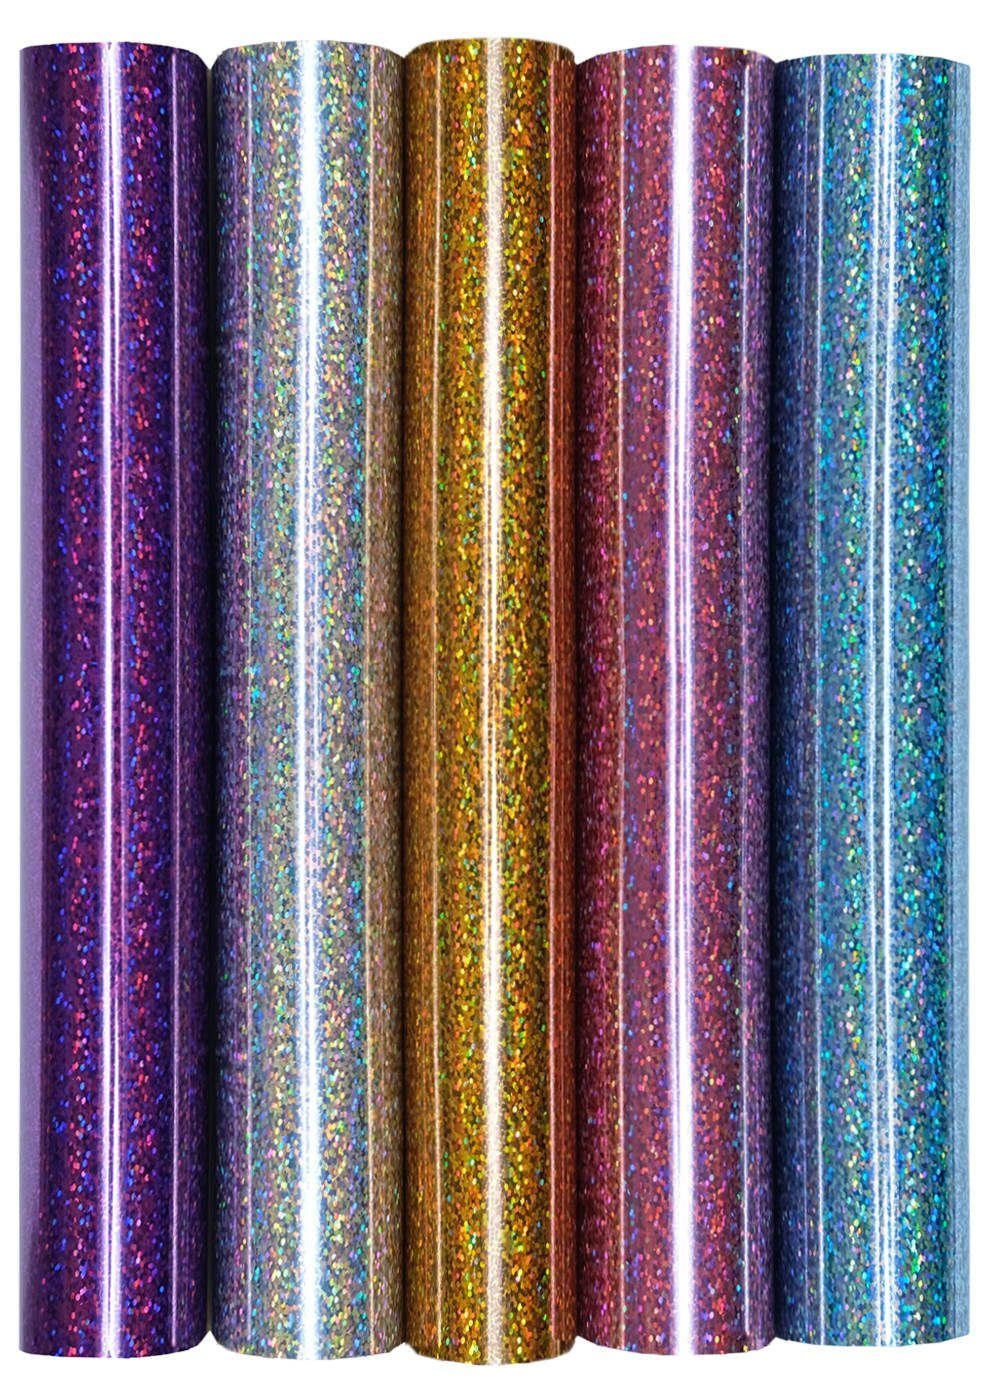 Aufbügeln Set A4 zum Hilltop 22er Transferfolie/Textilfolie Transparentpapier Rainbow Glitzer Multicolor